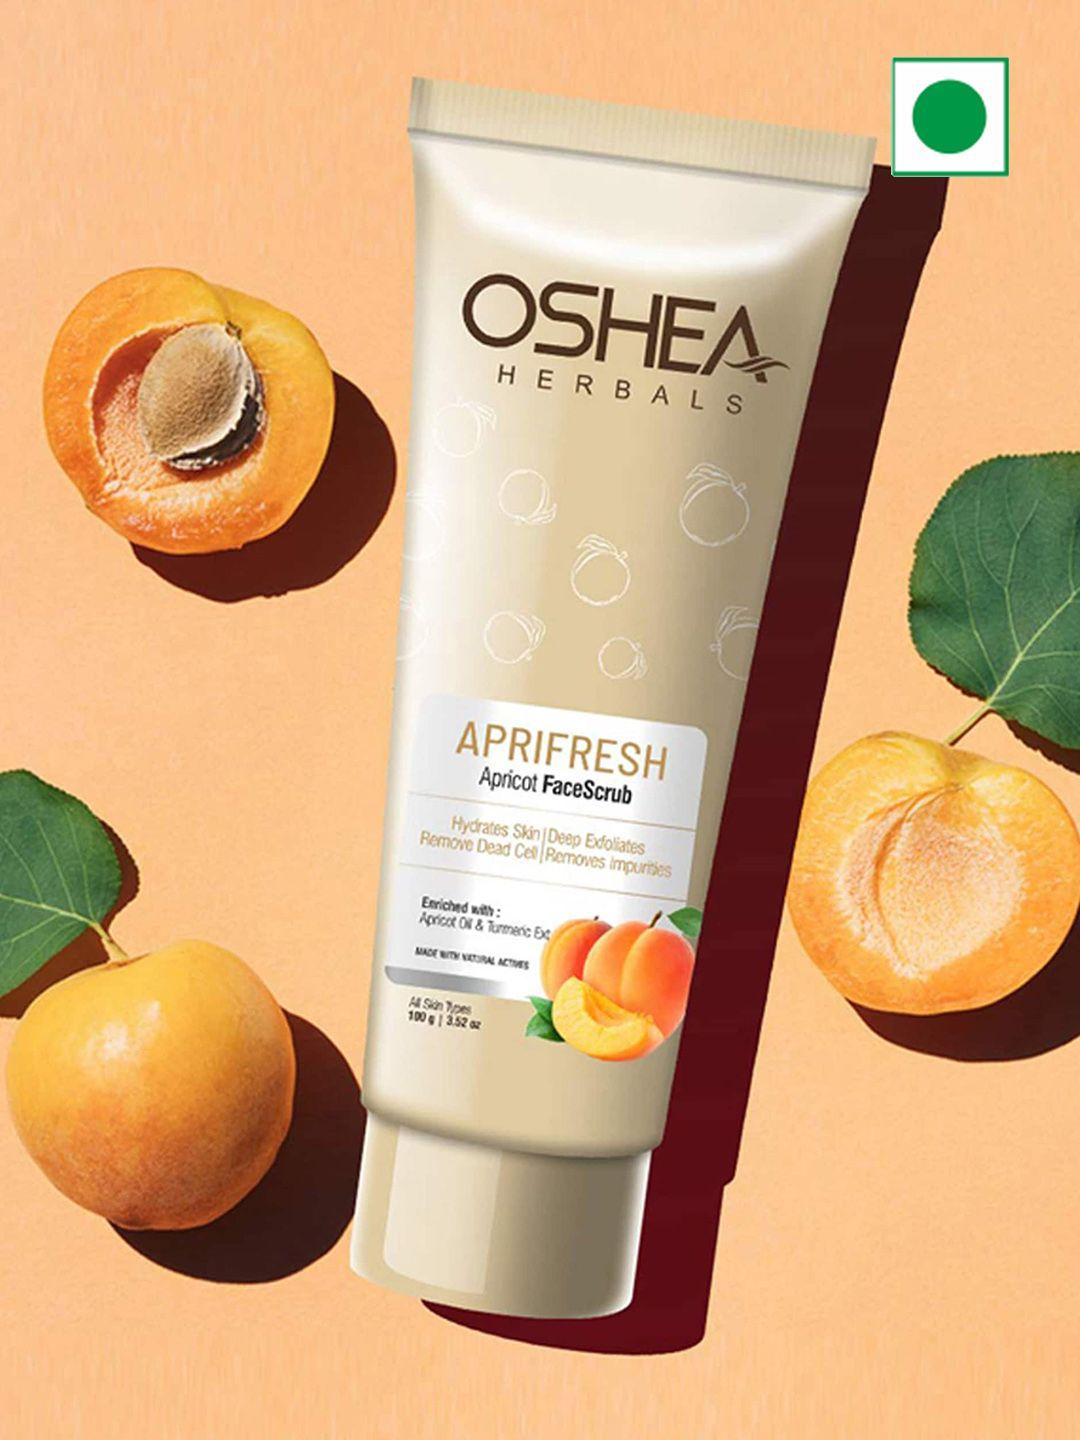 oshea herbals set of 2 aprifresh apricot face scrub 100g each